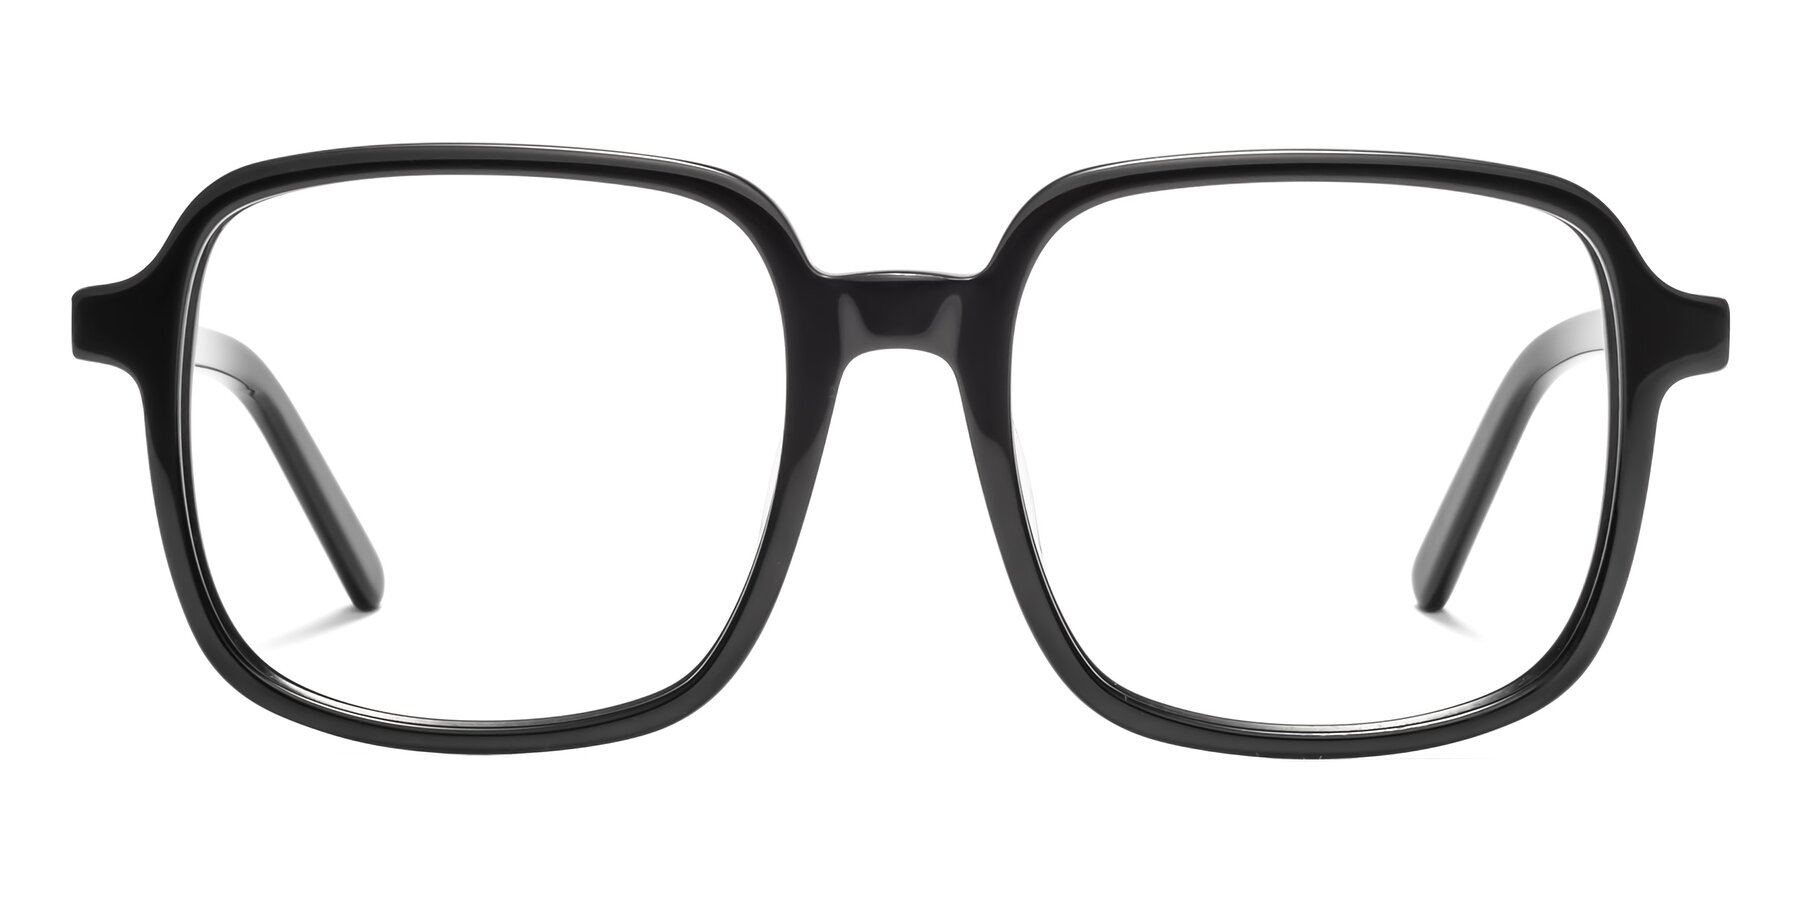 Water - Black Sunglasses Frame